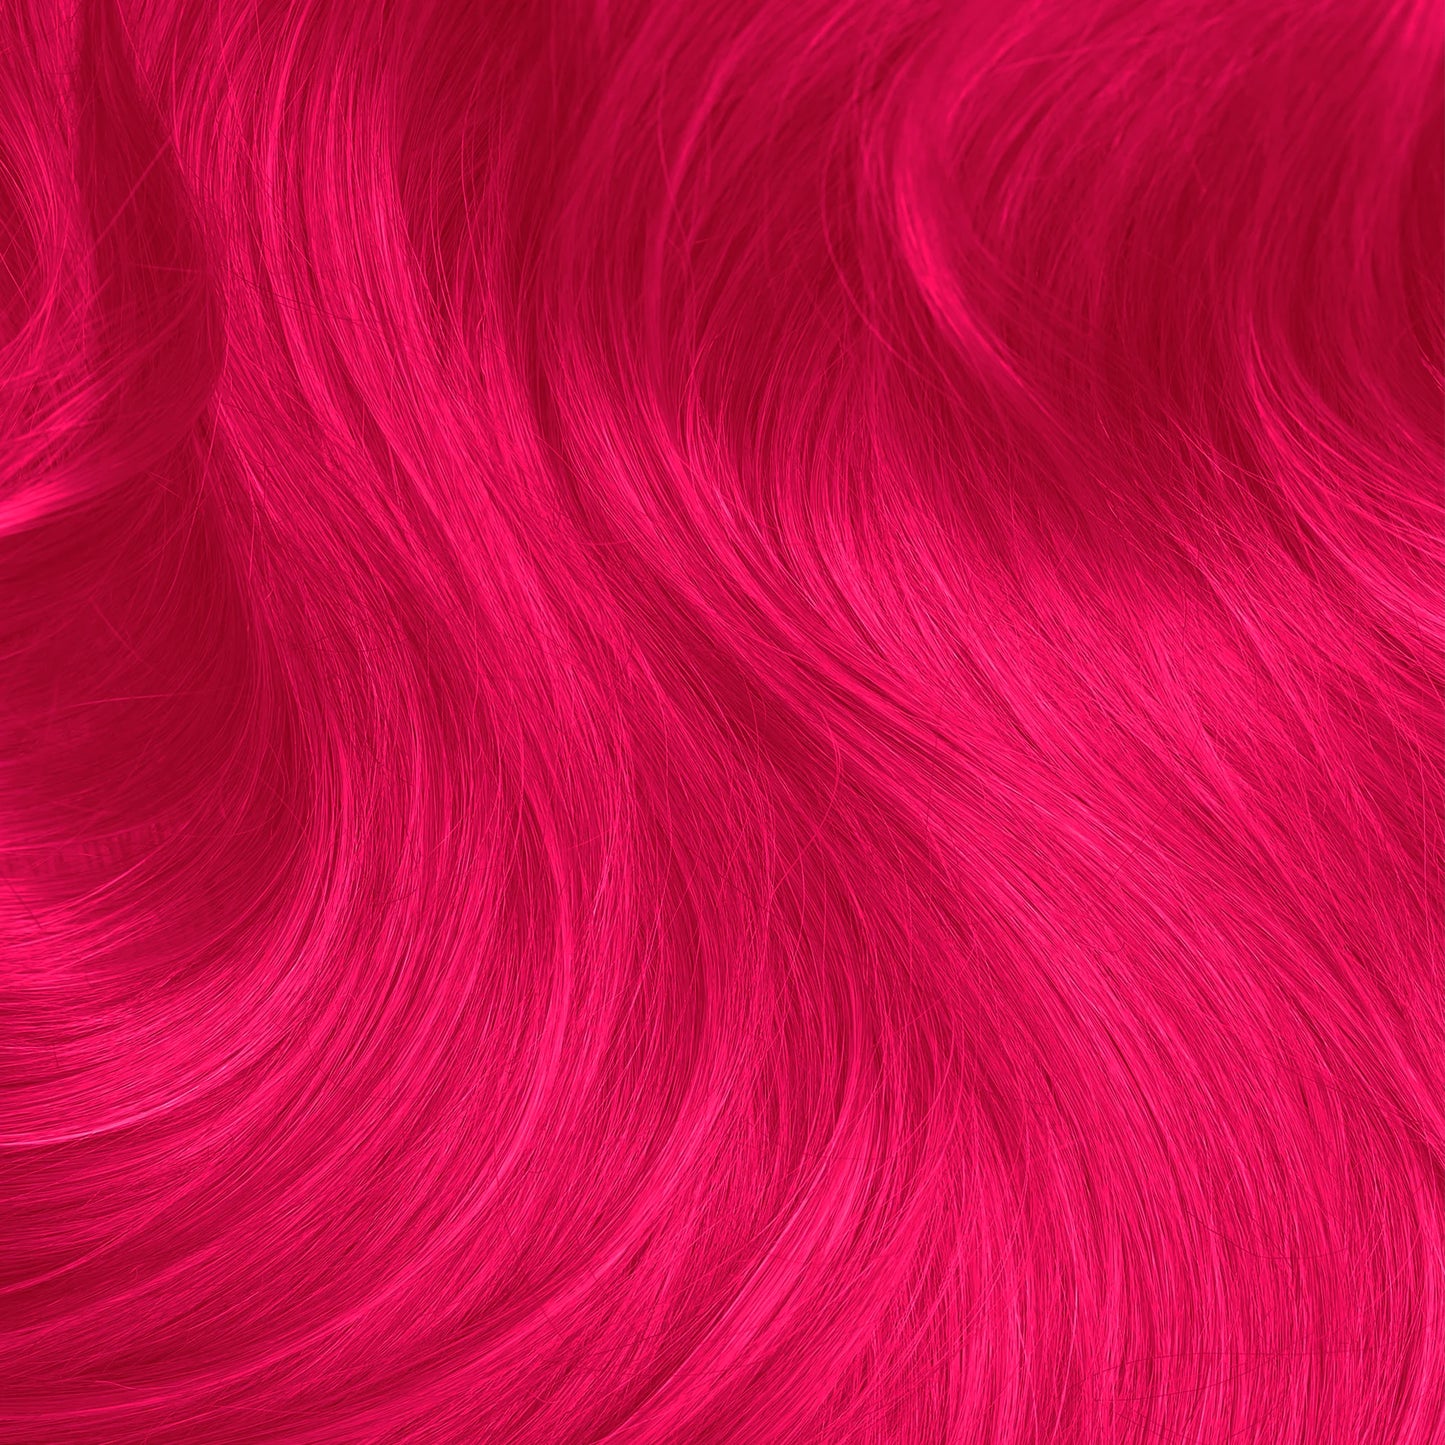 LYCHEE PINK hair dye Lunar Tides